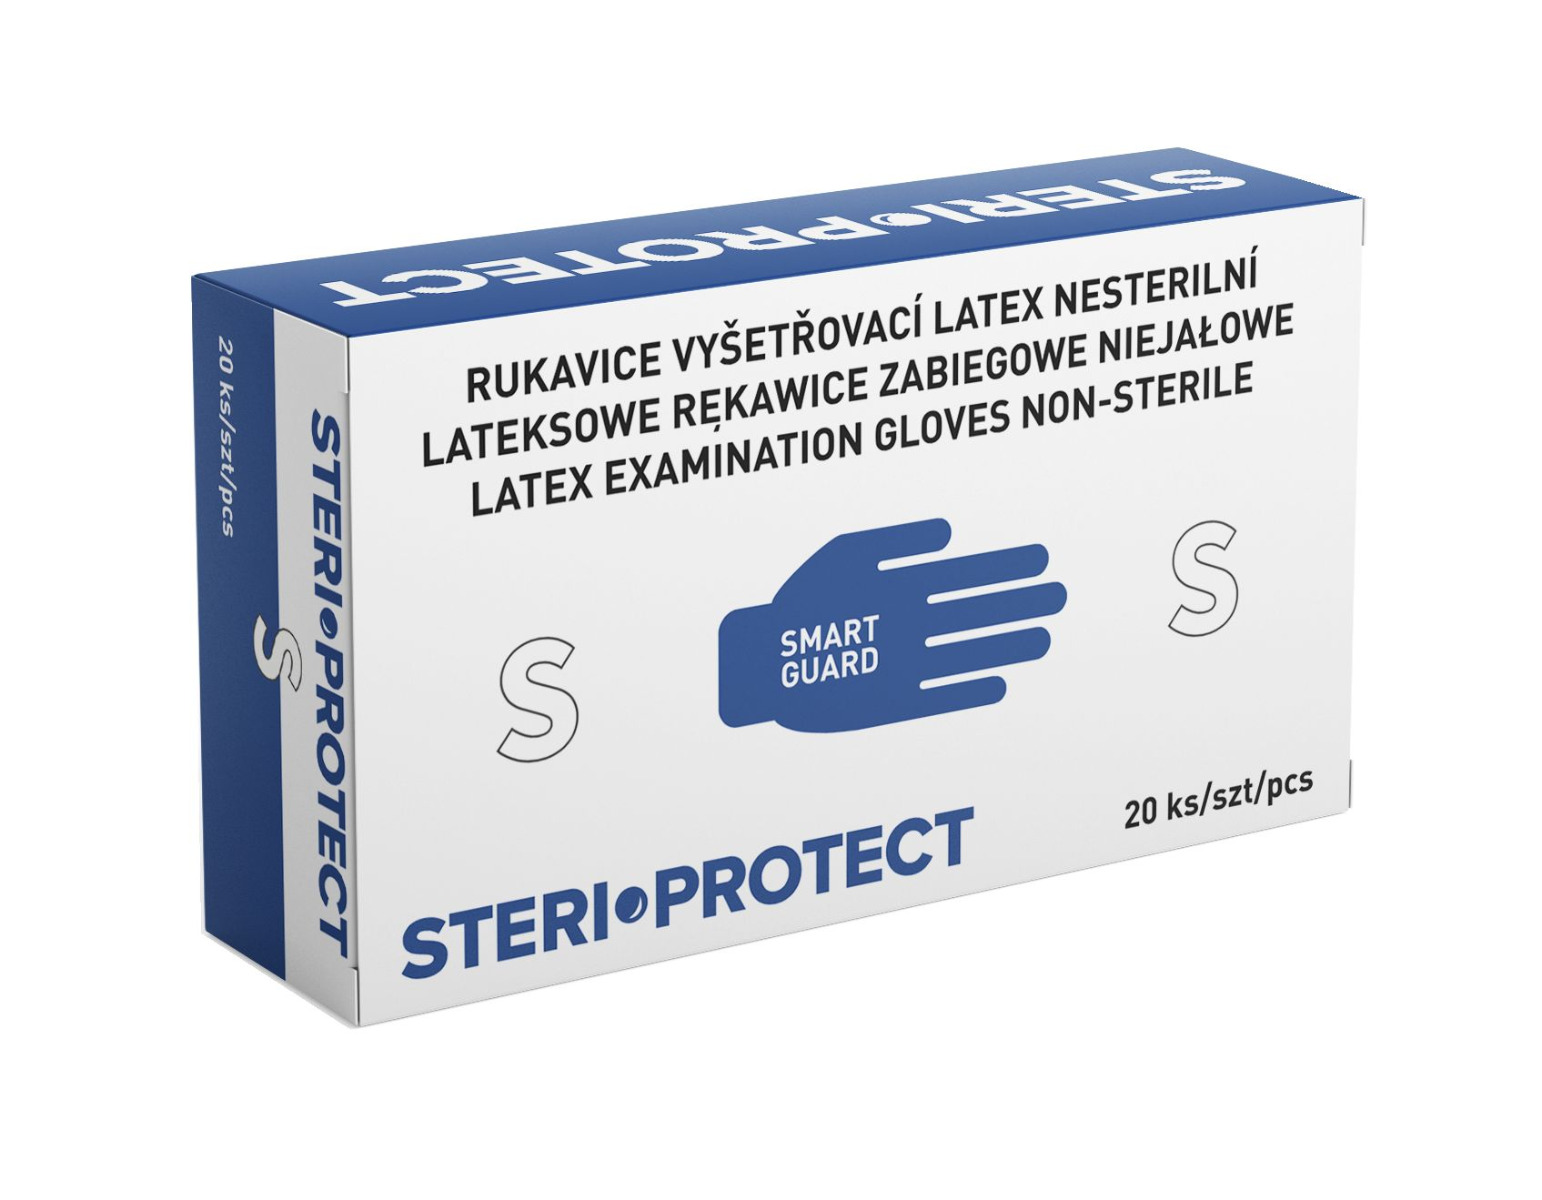 Steriwund Rukavice vyšetřovací latex s pudrem vel. S 20 ks Steriwund